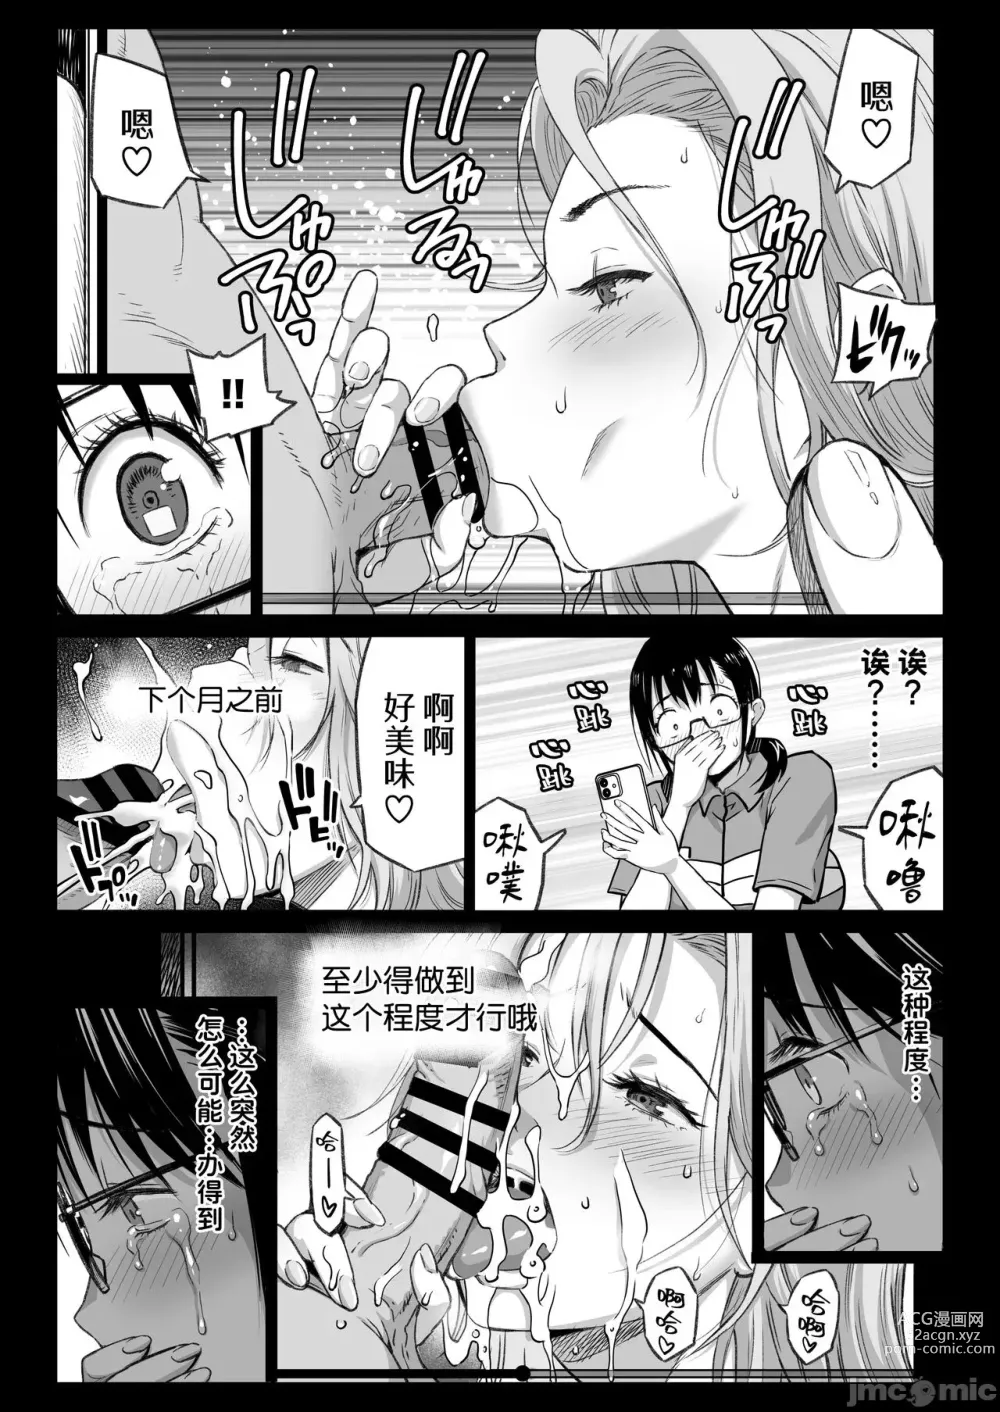 Page 13 of doujinshi 彼氏持ち学生バイト弓野ちゃんは 今日も店長に狙われる